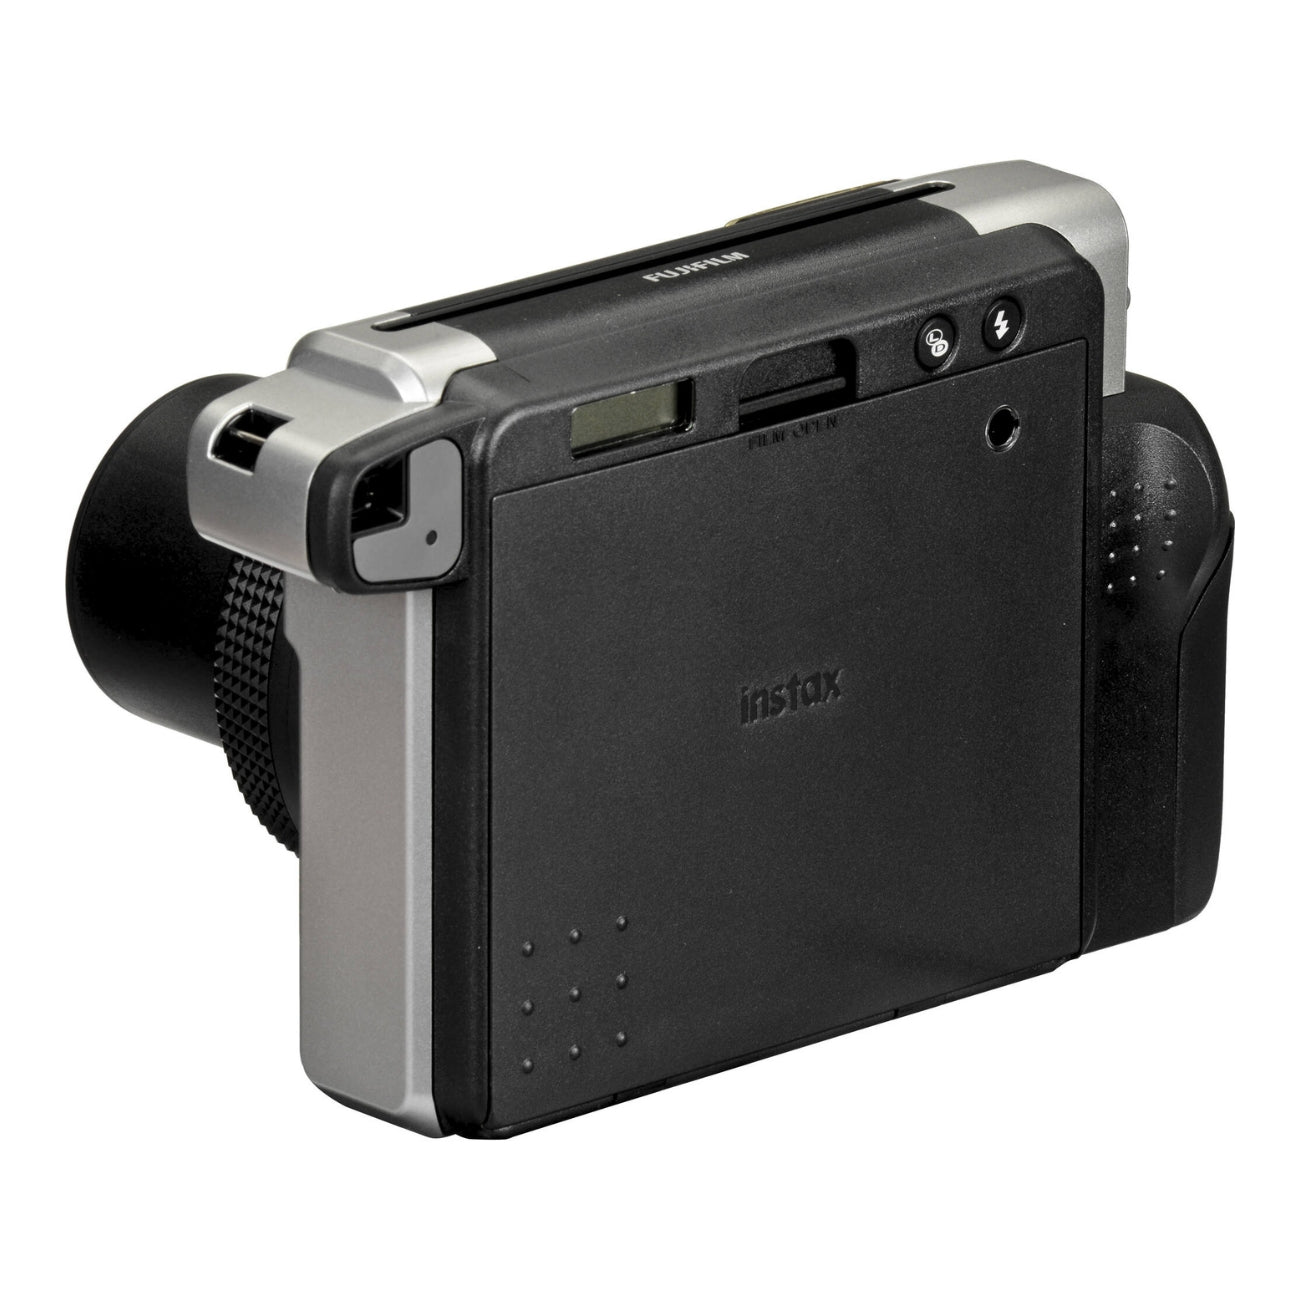 FUJIFILM INSTAX Wide 300 Instant Film Camera (Black) - Side View